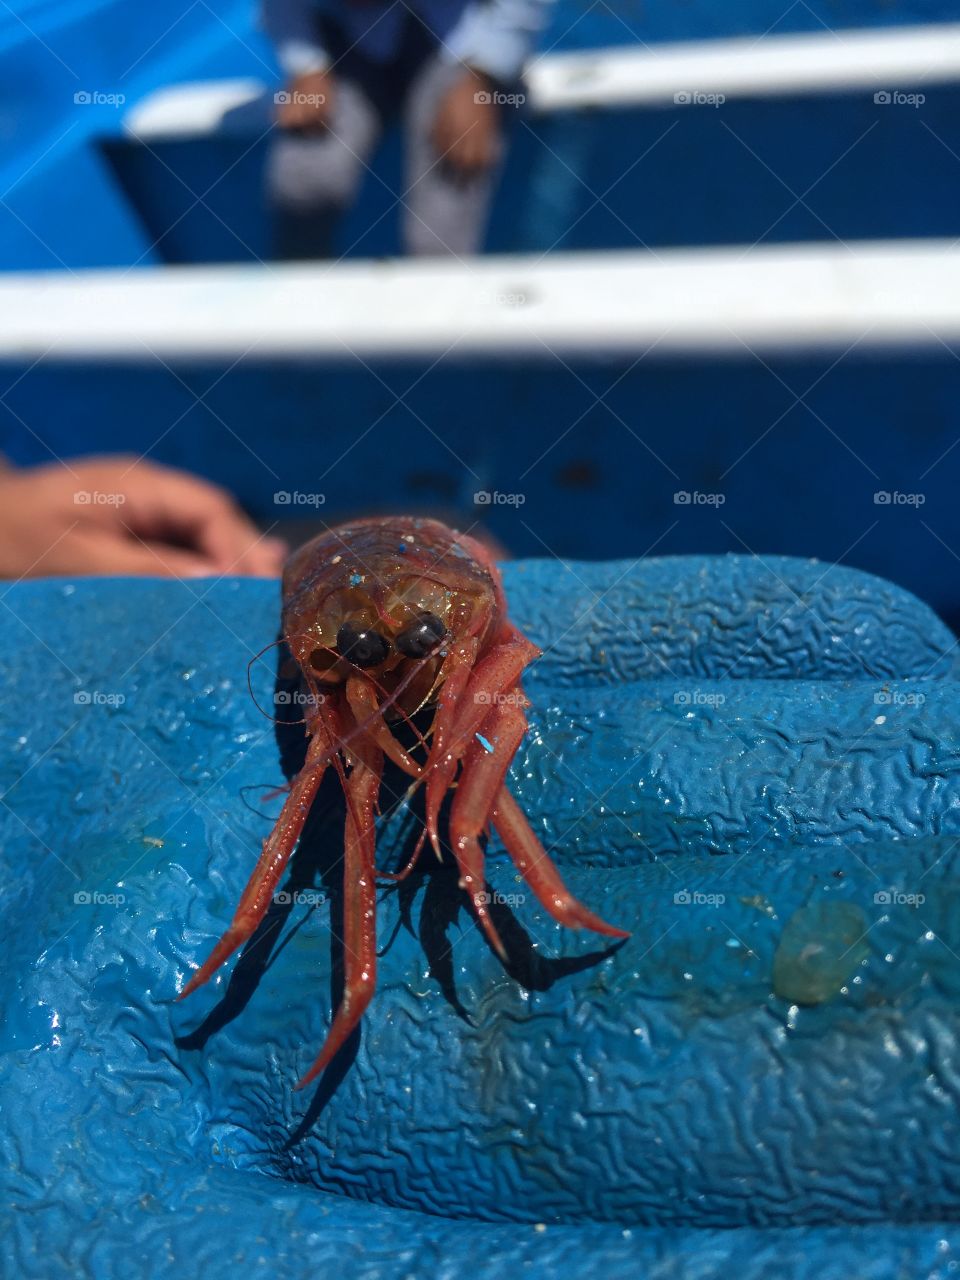 Crawfish on a blue glove 